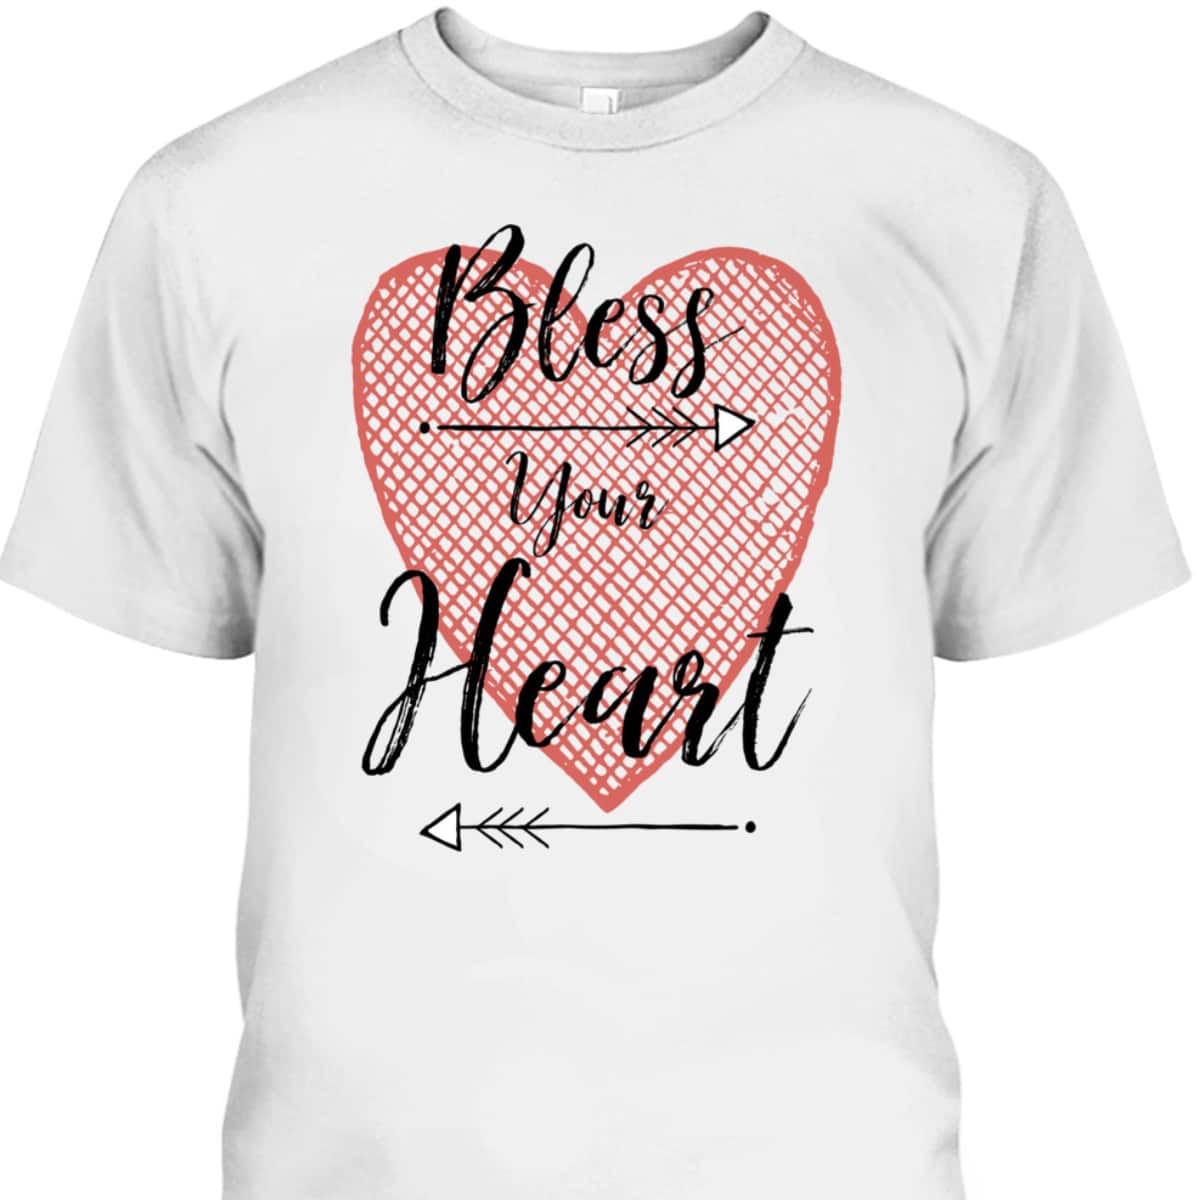 Bless Your Heart Cross Hatch Heart And Arrows T-Shirt